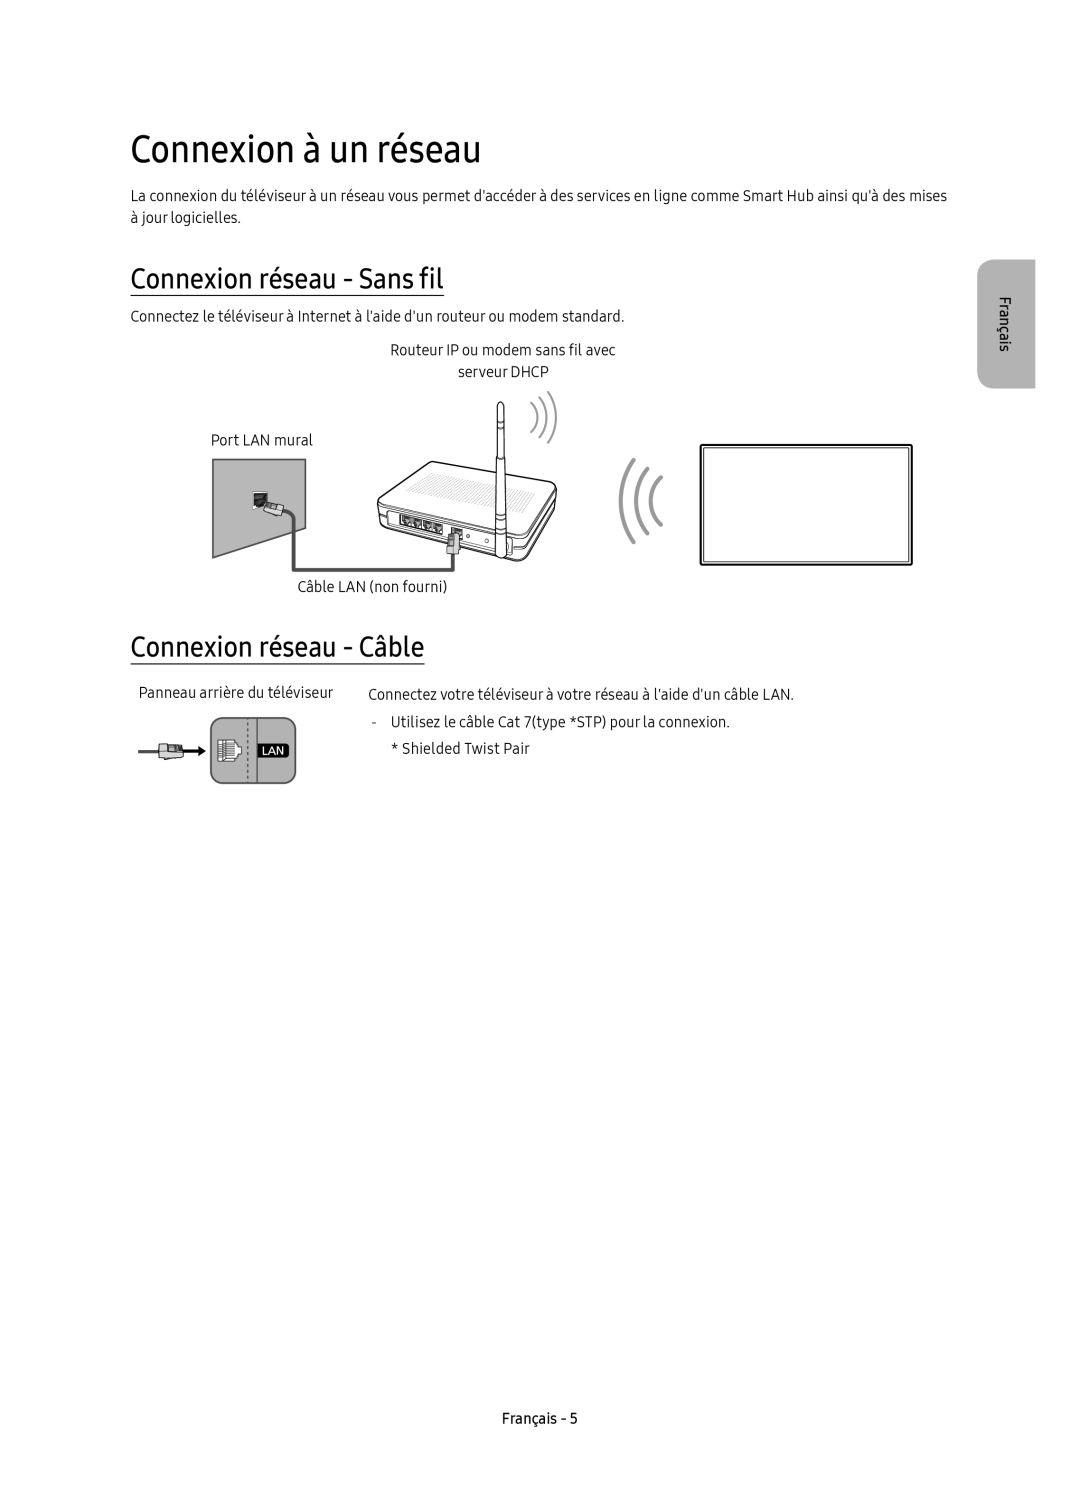 Samsung UE49KU6510UXZG manual Connexion à un réseau, Connexion réseau - Sans fil, Connexion réseau - Câble, Français 